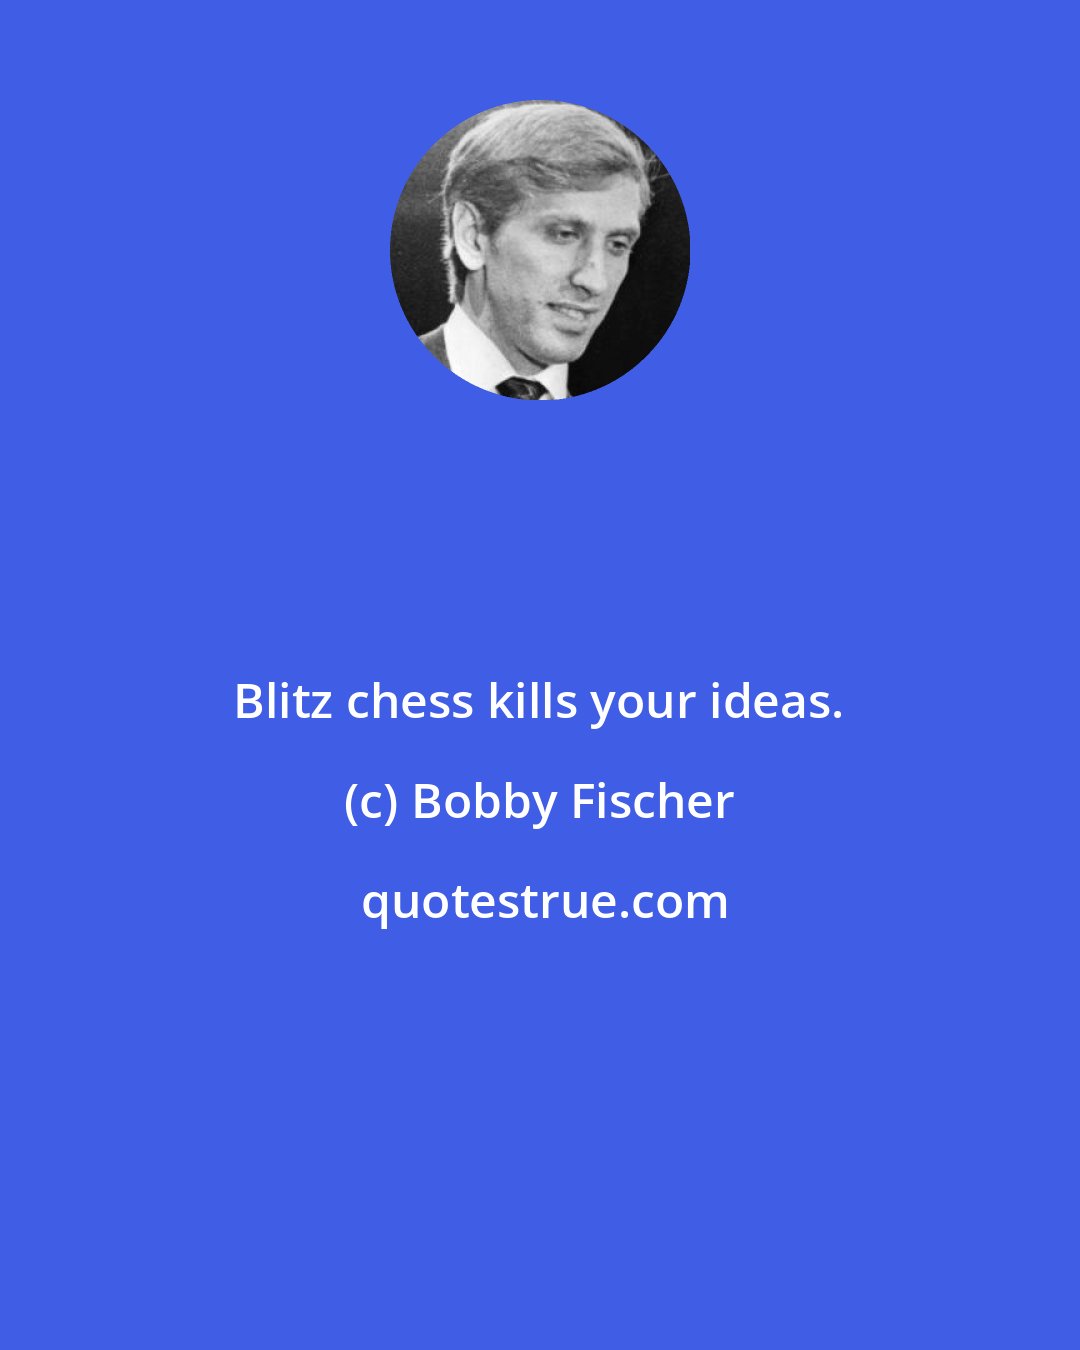 Bobby Fischer: Blitz chess kills your ideas.